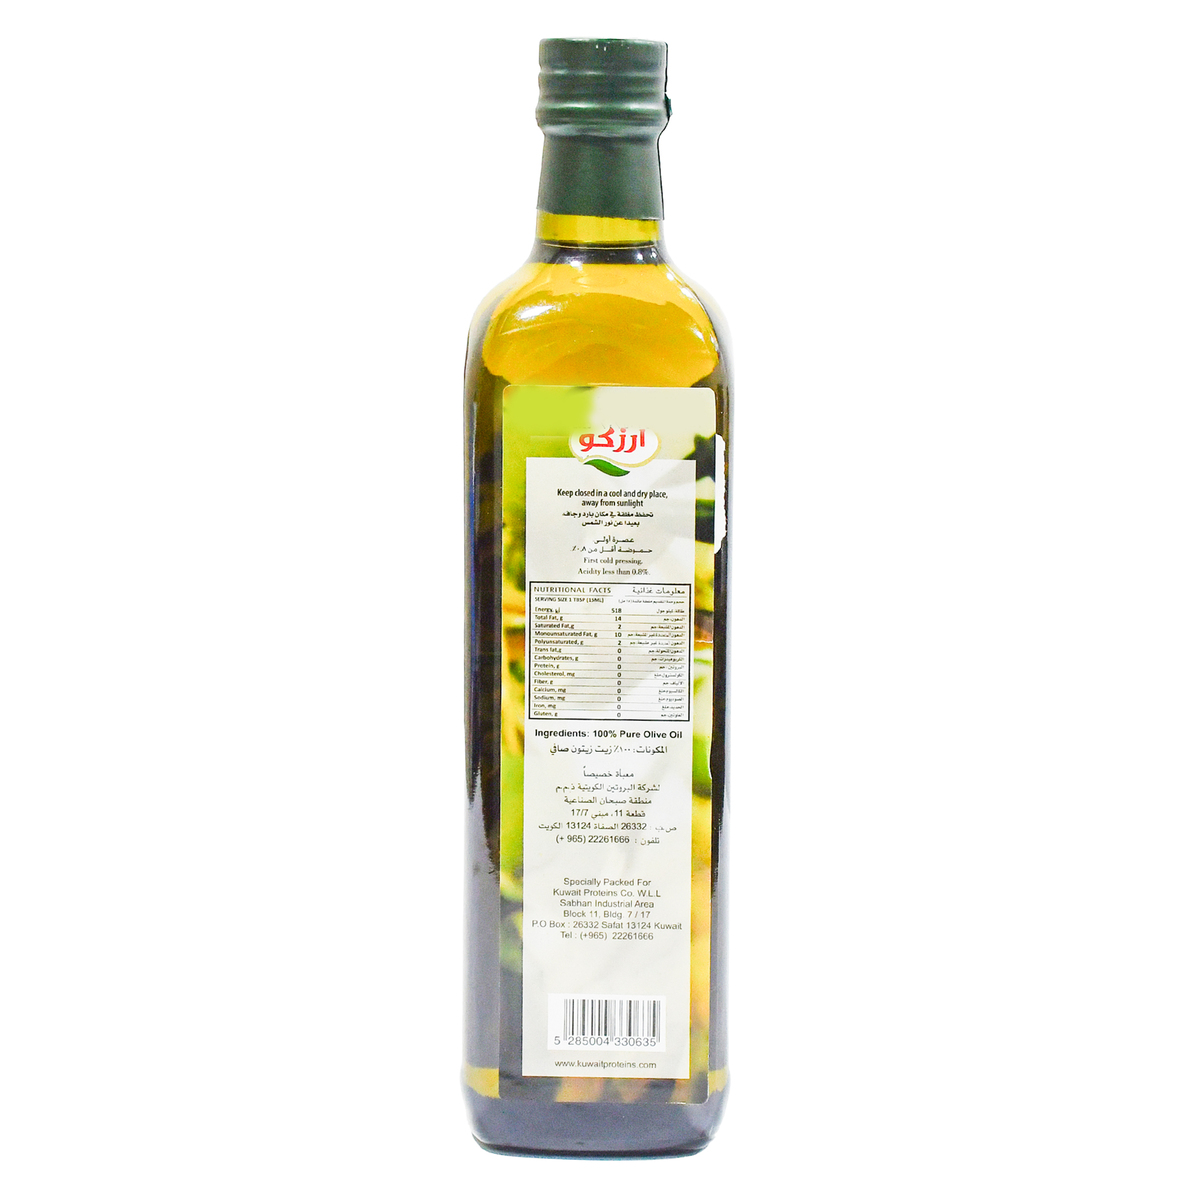 Arzco Extra Virgin Olive Oil 750 ml